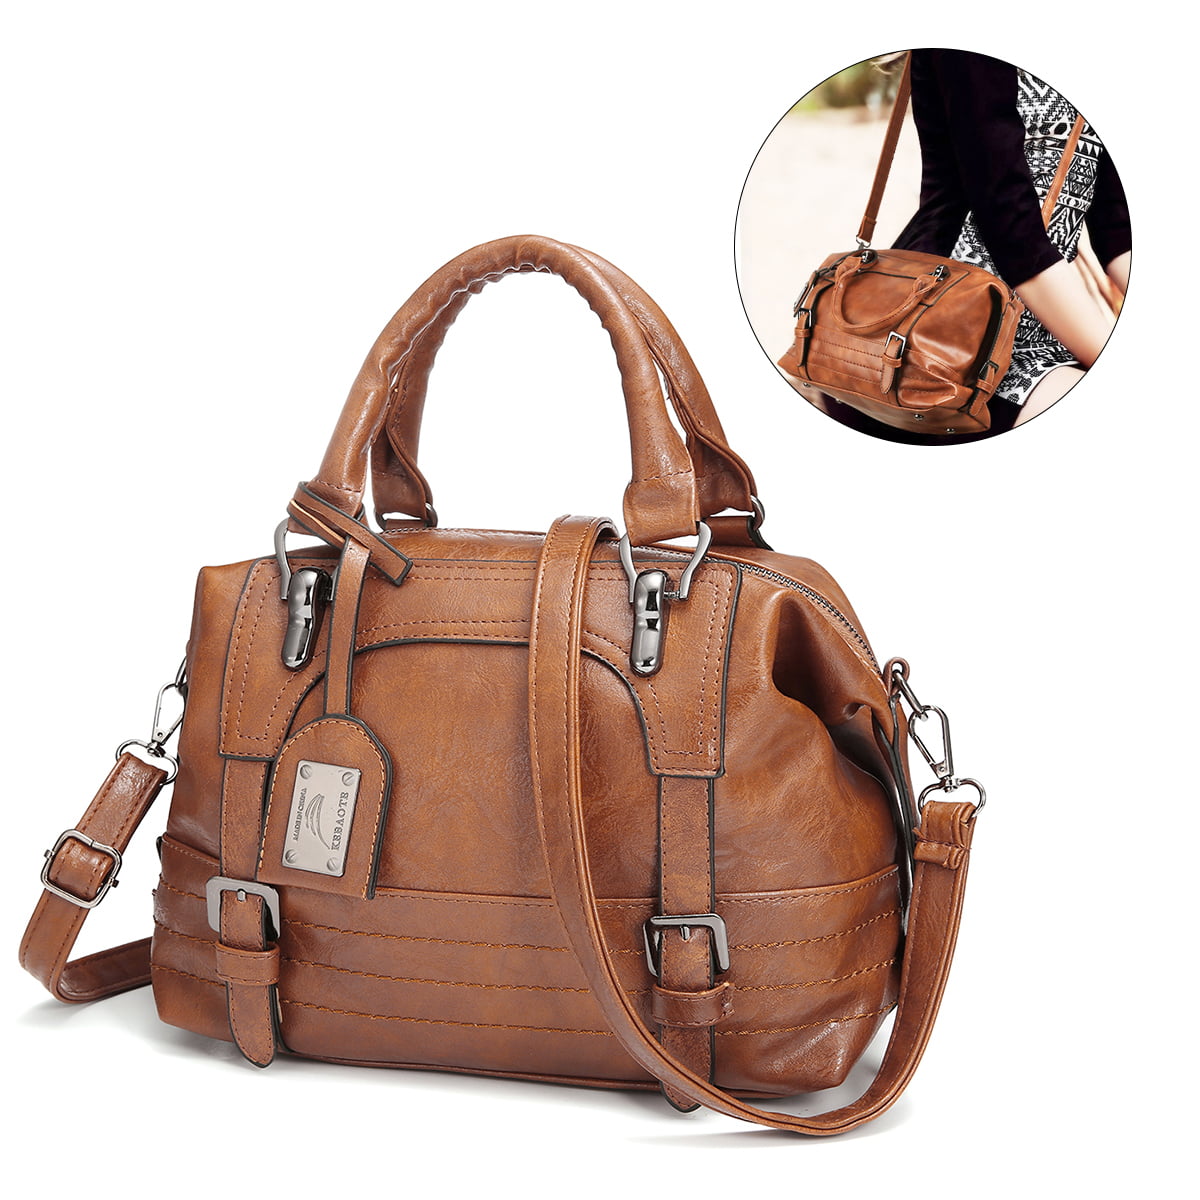 Women's Leather Handbag Shoulder Bags Tote Purse Ladies Messenger Bags Hot 